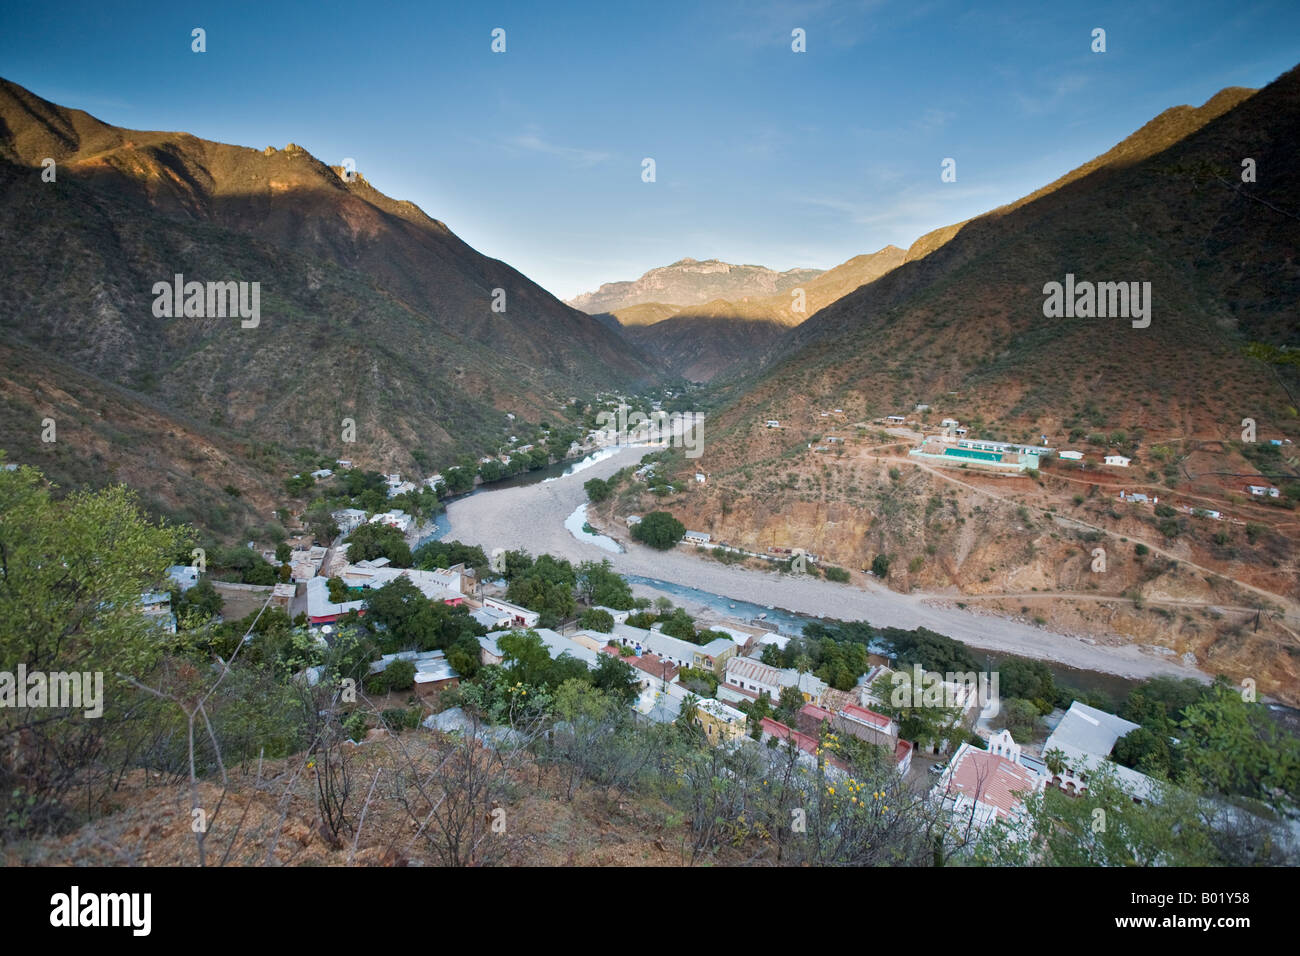 The town of Batopilas, Copper Canyon area Mexico Stock Photo